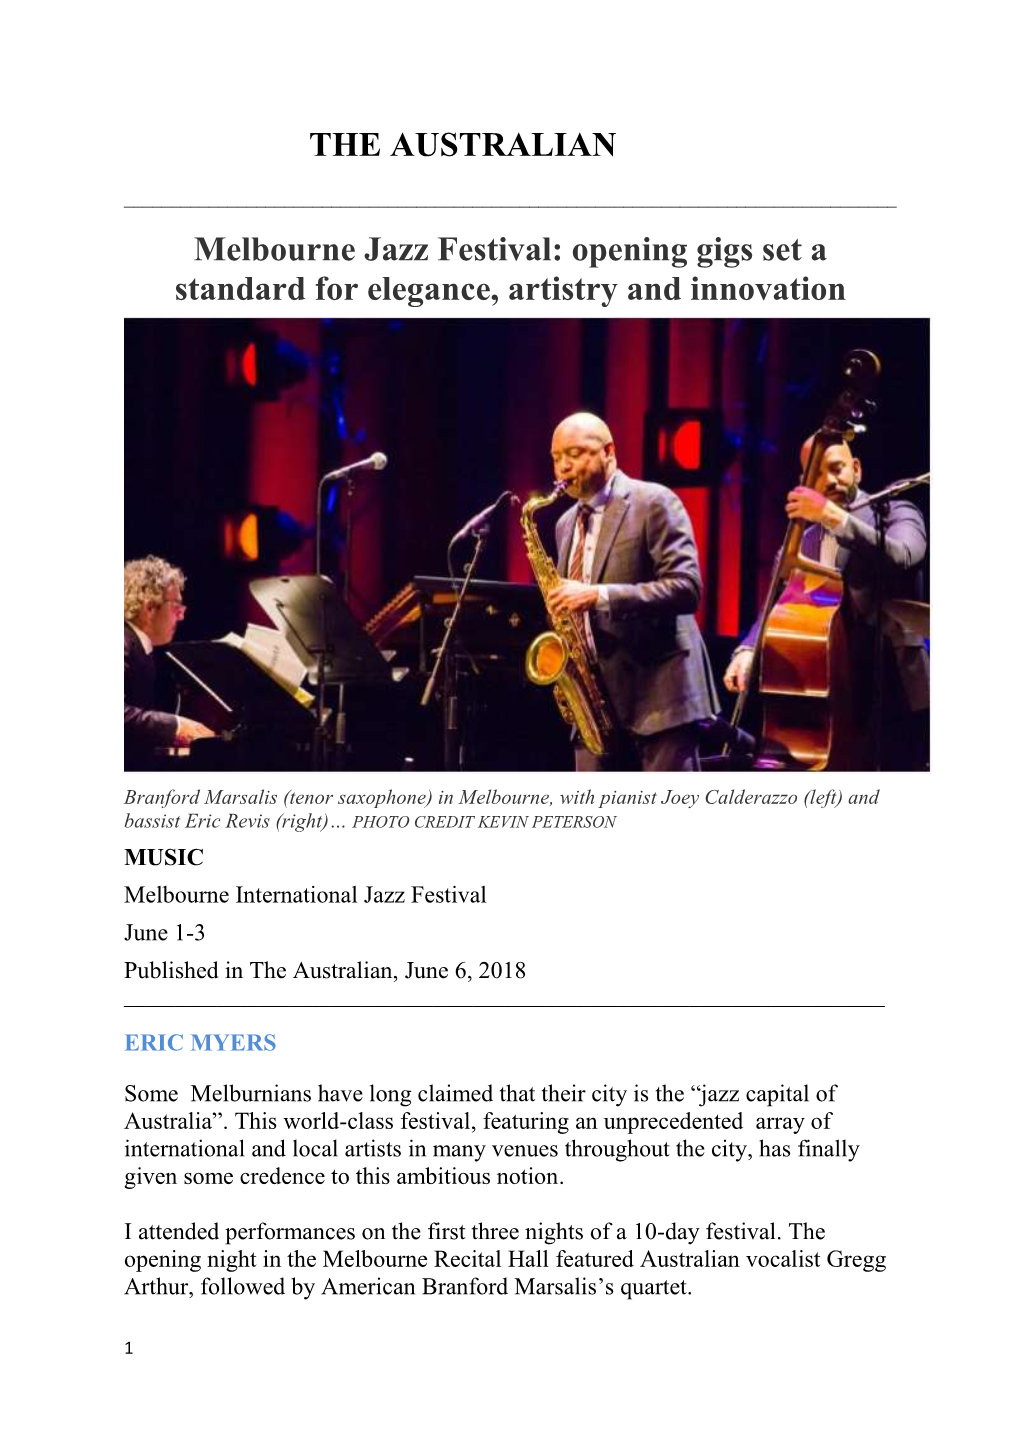 THE AUSTRALIAN Melbourne Jazz Festival